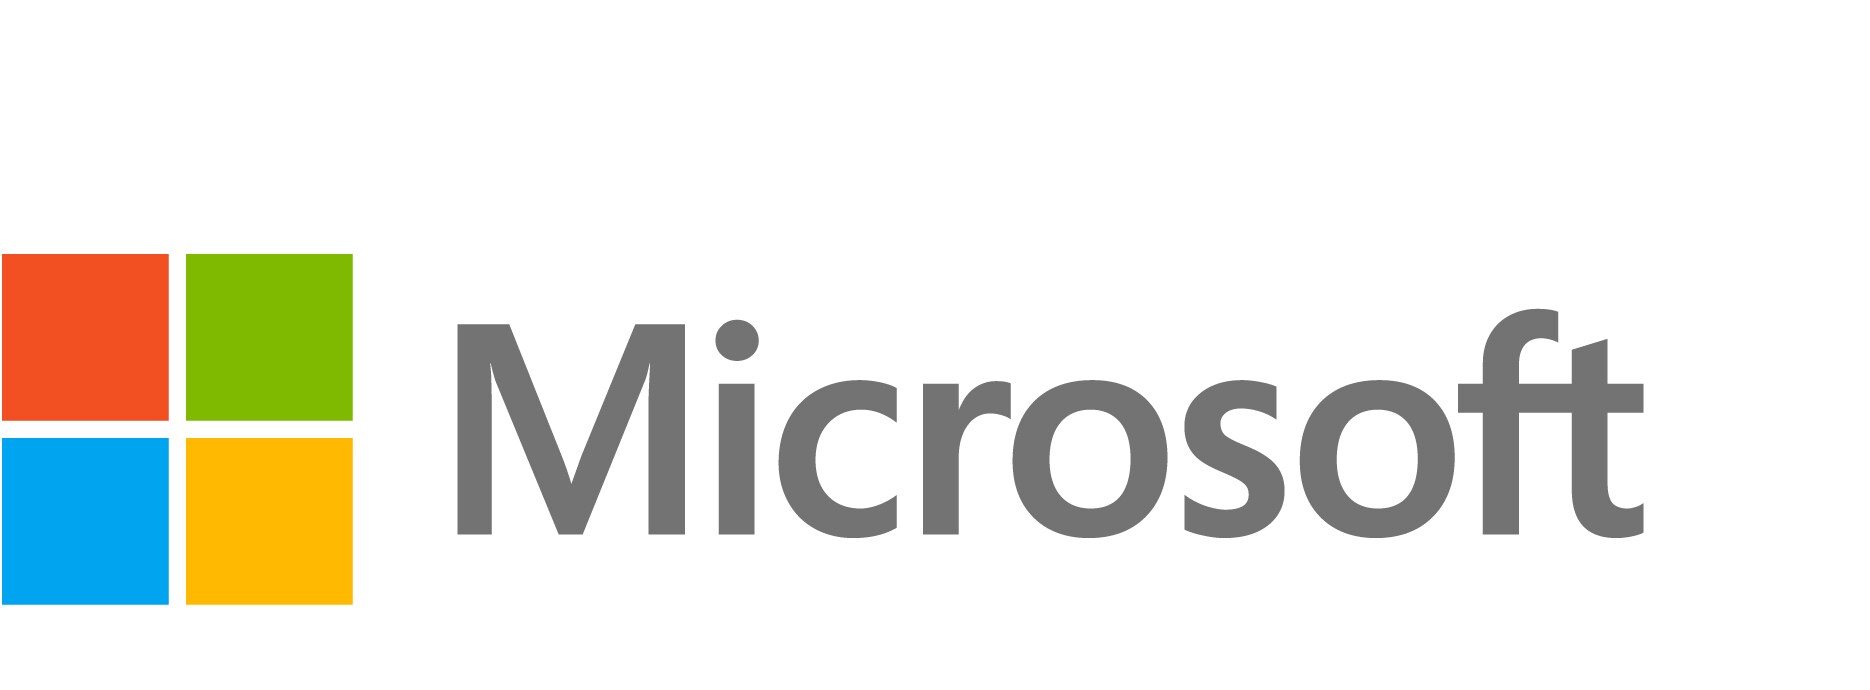 Windows 10/11 Enterprise A5 for use benefits - subscription license (1 mont